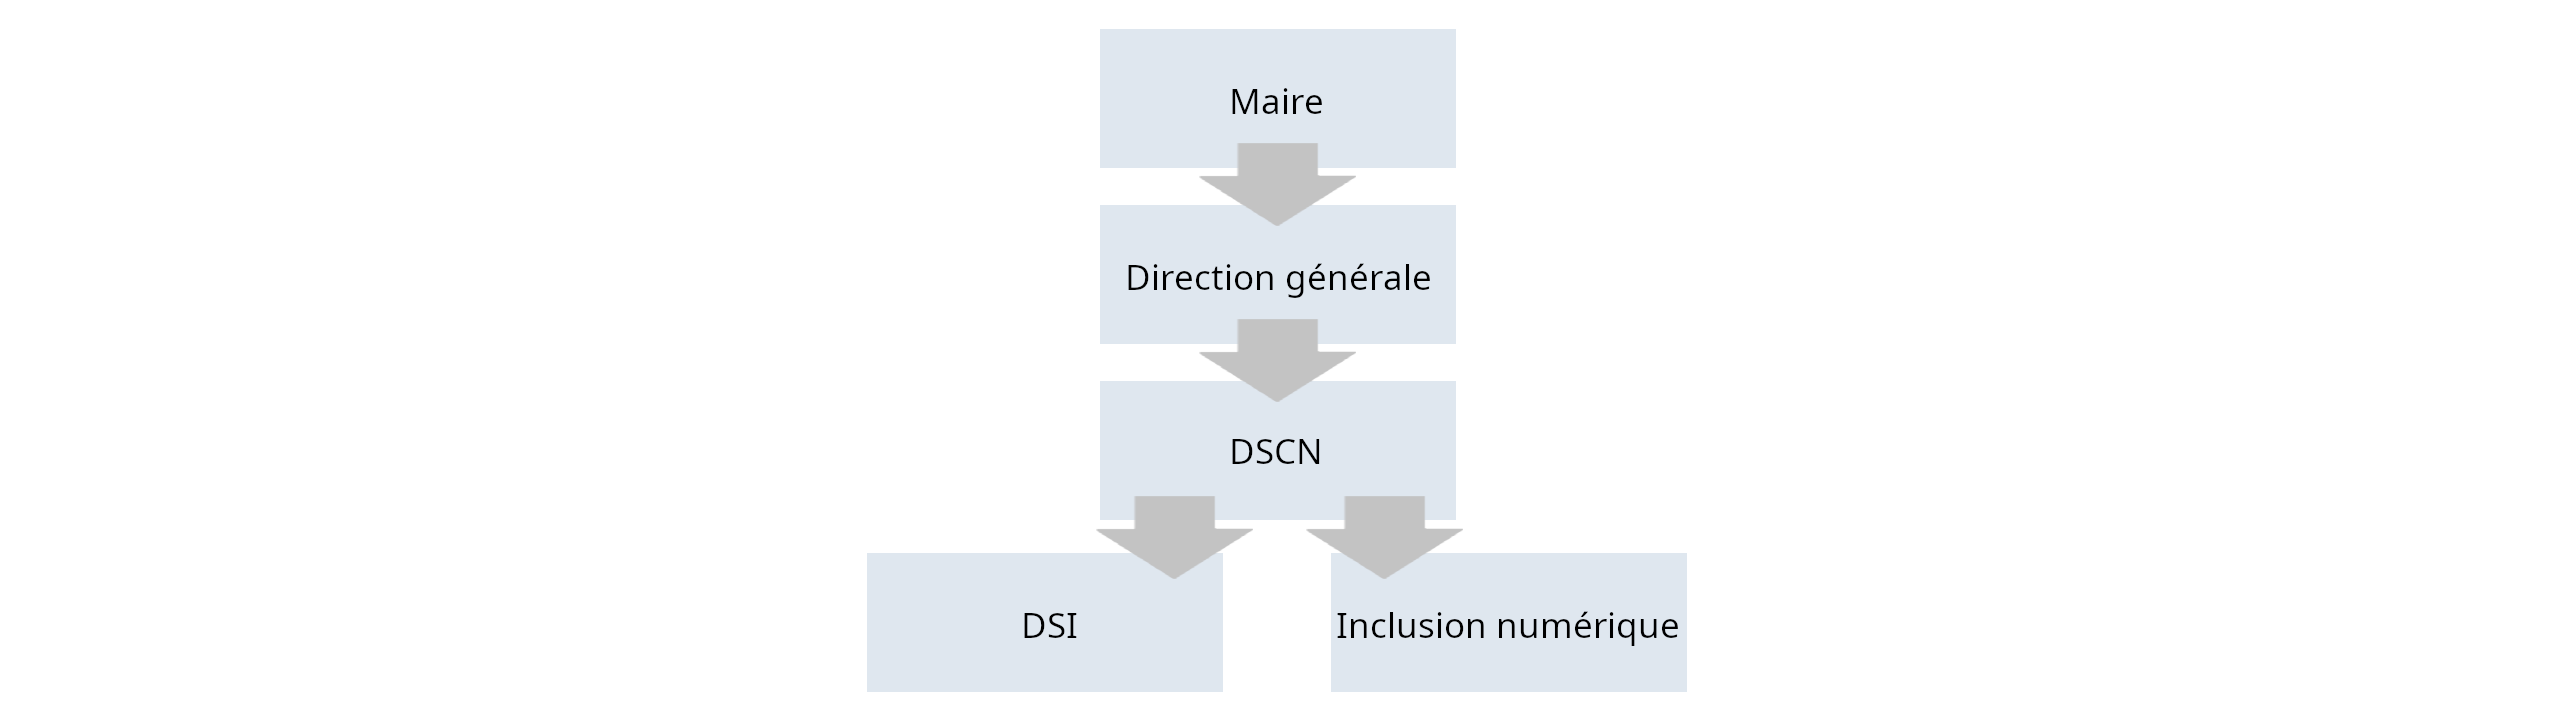 Organigramme simplifié de l'organisation